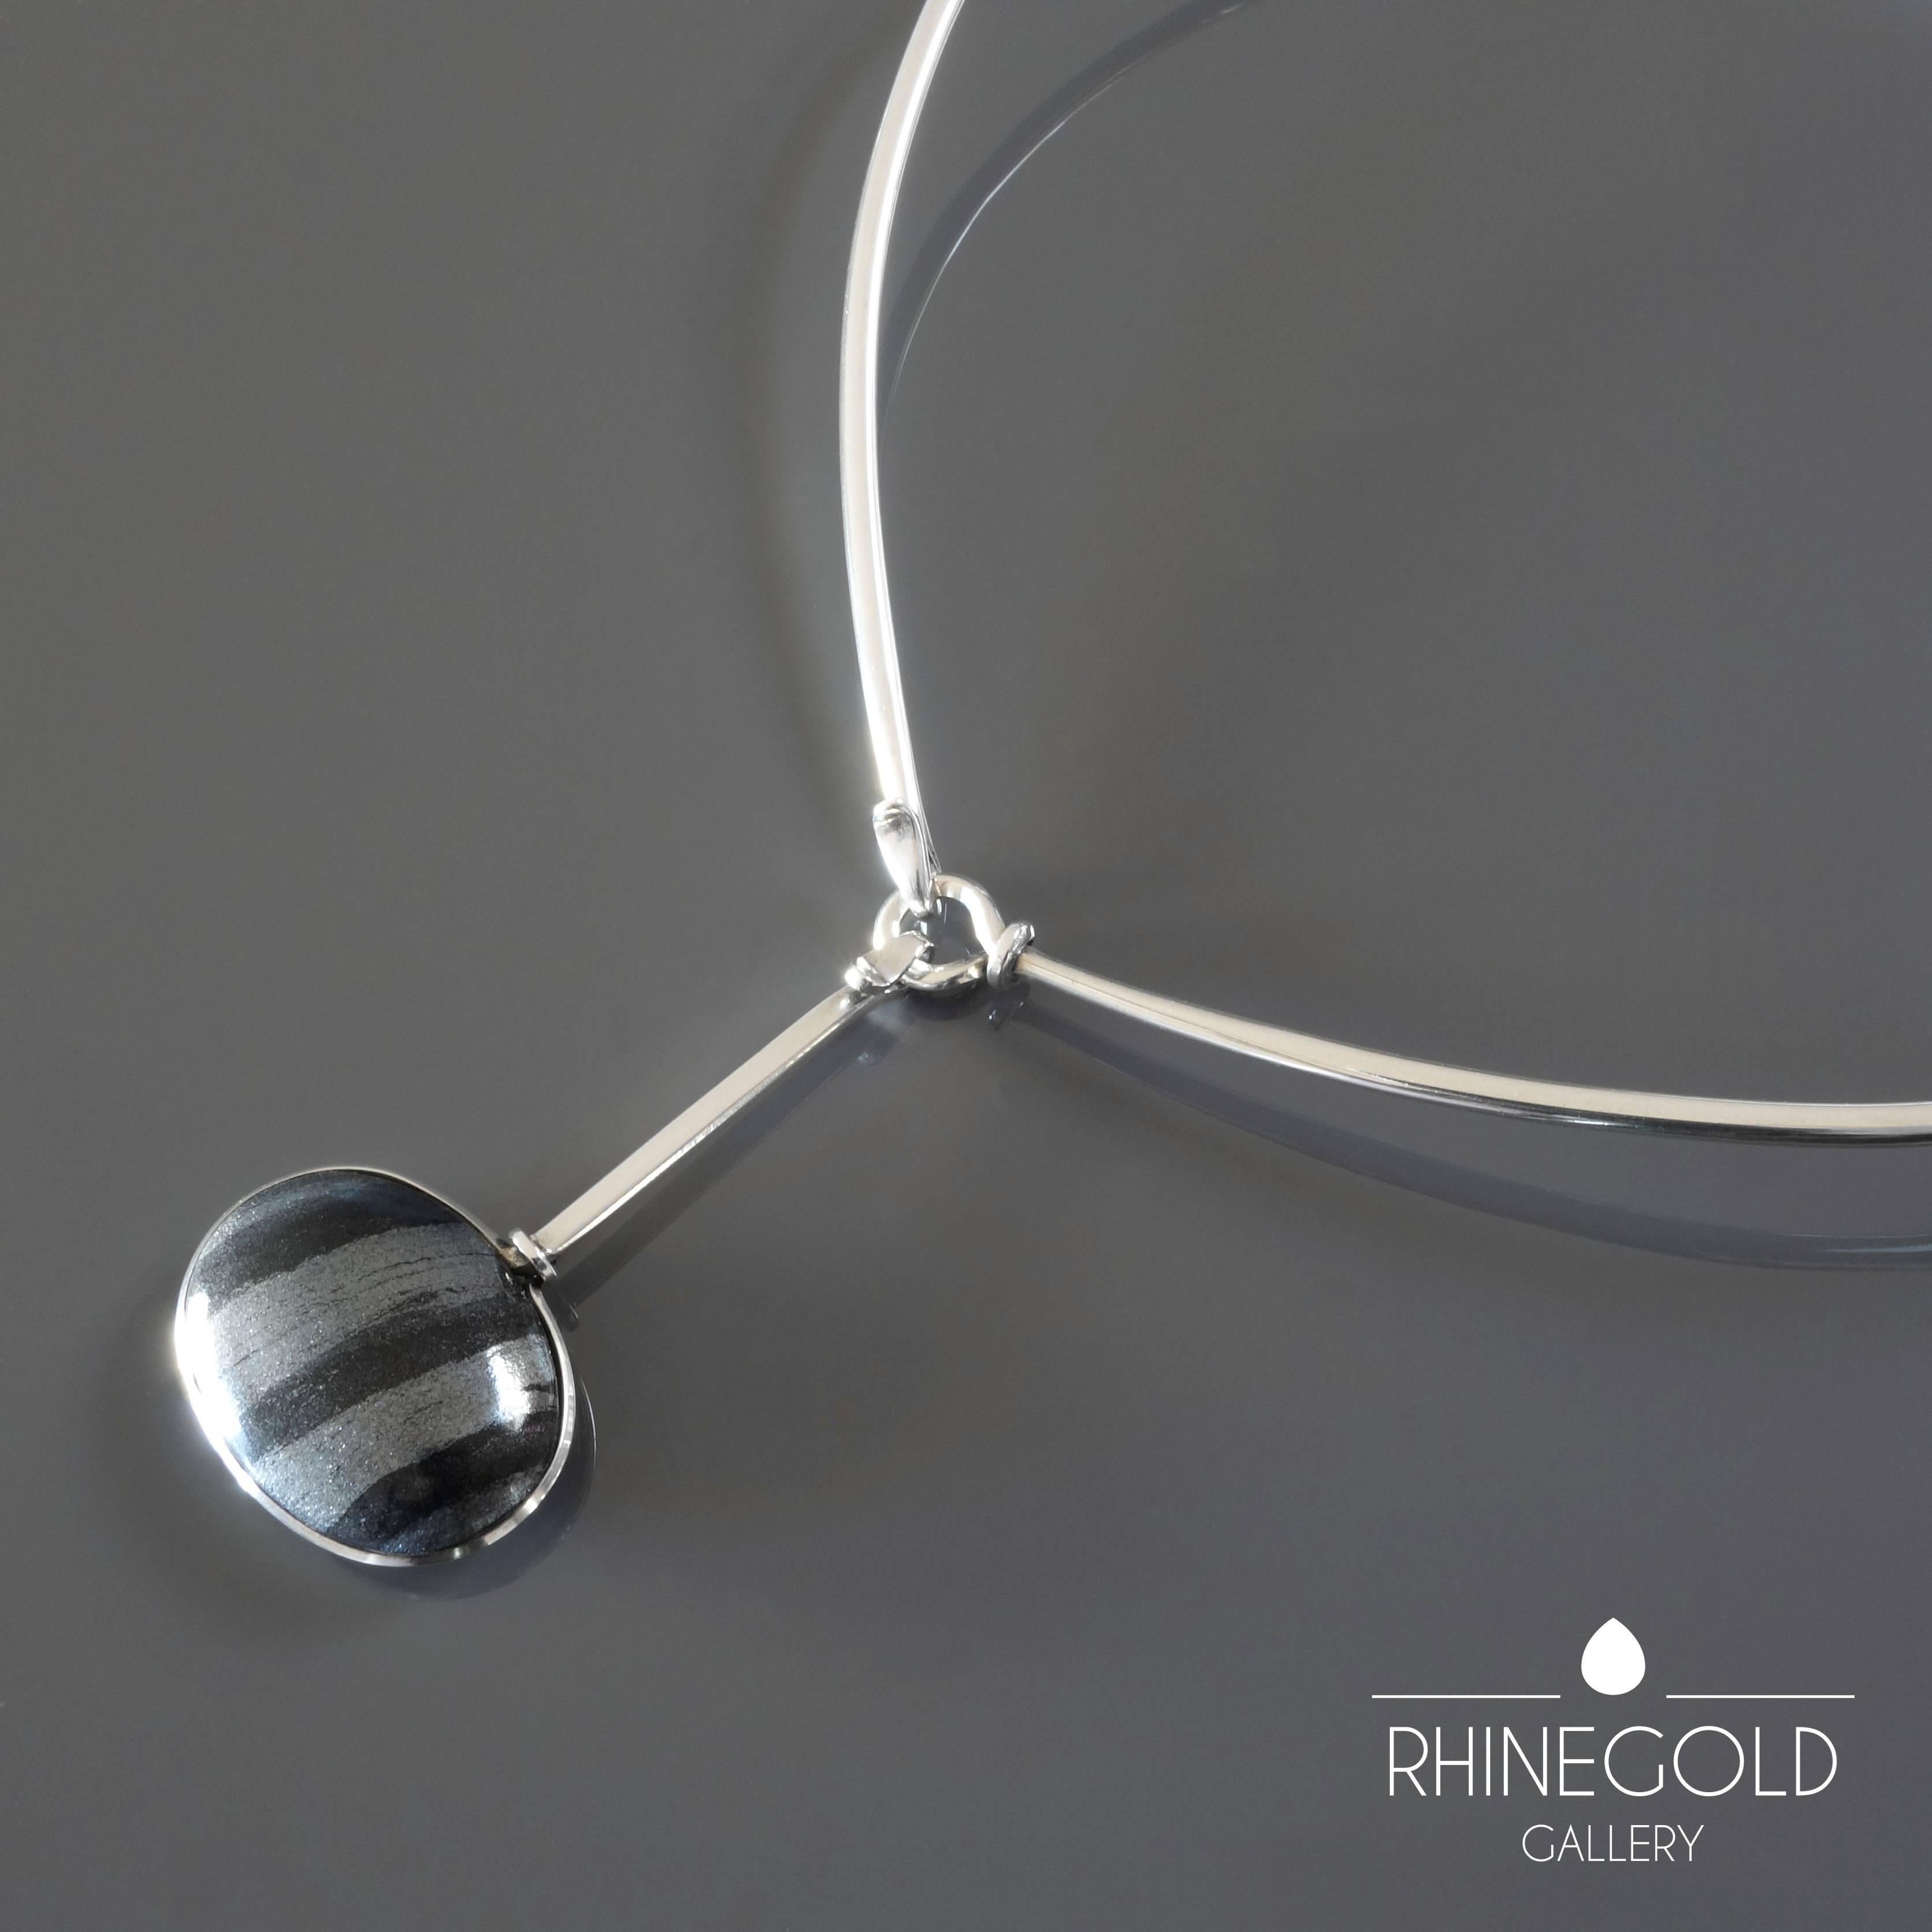 Torun Bülow Hübe for Georg Jensen: Modernist Silver Neck Ring #174 with Hematite Silver Drop Pendant #129
Sterling silver, hematite
Neck ring: L 45 cm (approx. 17 ¾”)
Pendant: L 6.2 cm, W 3.1 cm (approx. 2 7/16” to 1 ¼”)
Weight approx. 45.5